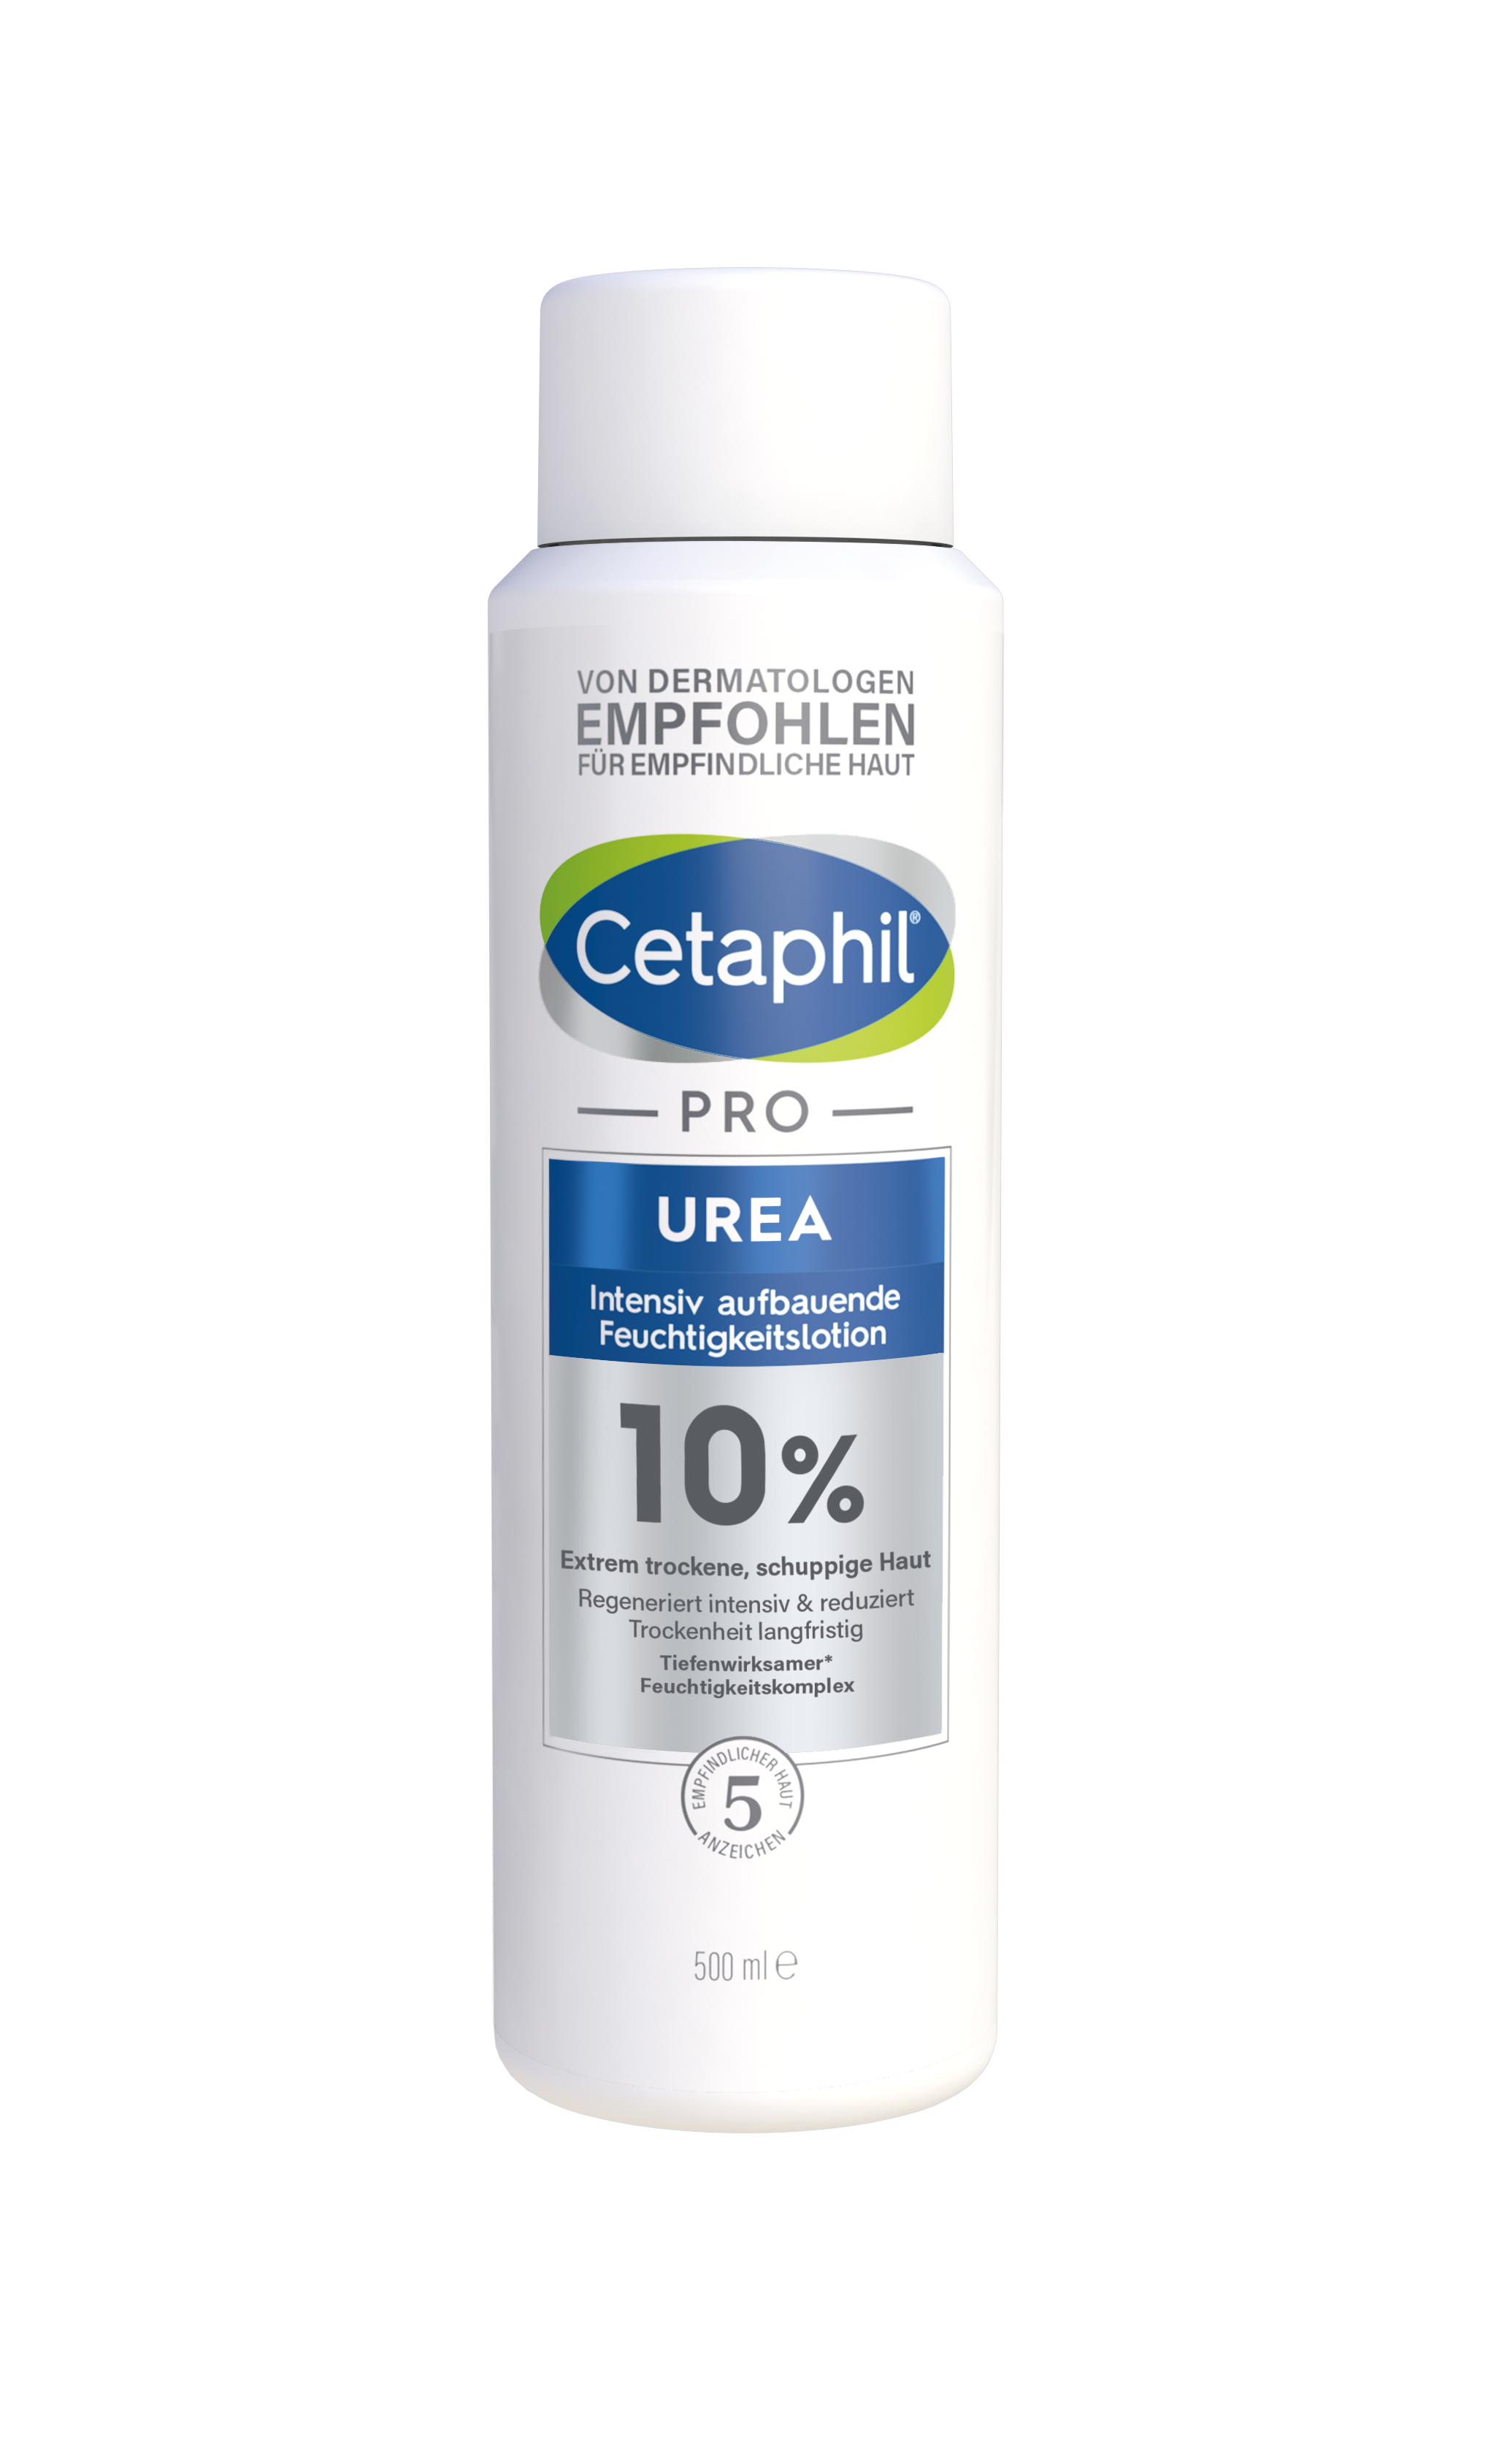 Cetaphil PRO Urea 10% Intensiv aufbauende Feuchtigkeitslotion (500 ml)